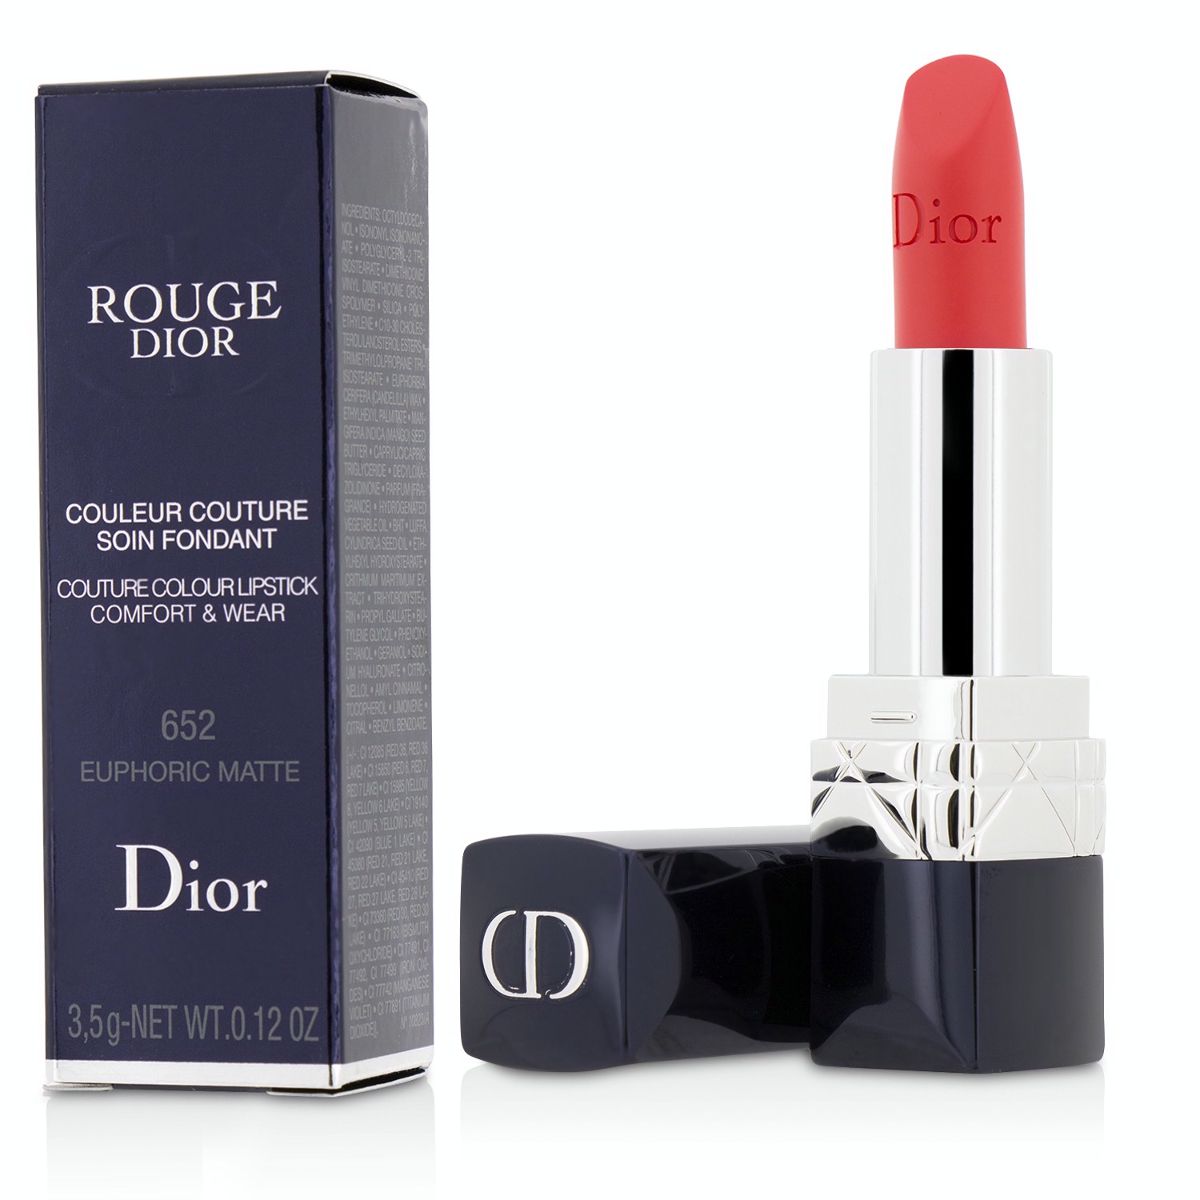 Rouge Dior Couture Colour Comfort  Wear Matte Lipstick - # 652 Euphoric Matte Christian Dior Image